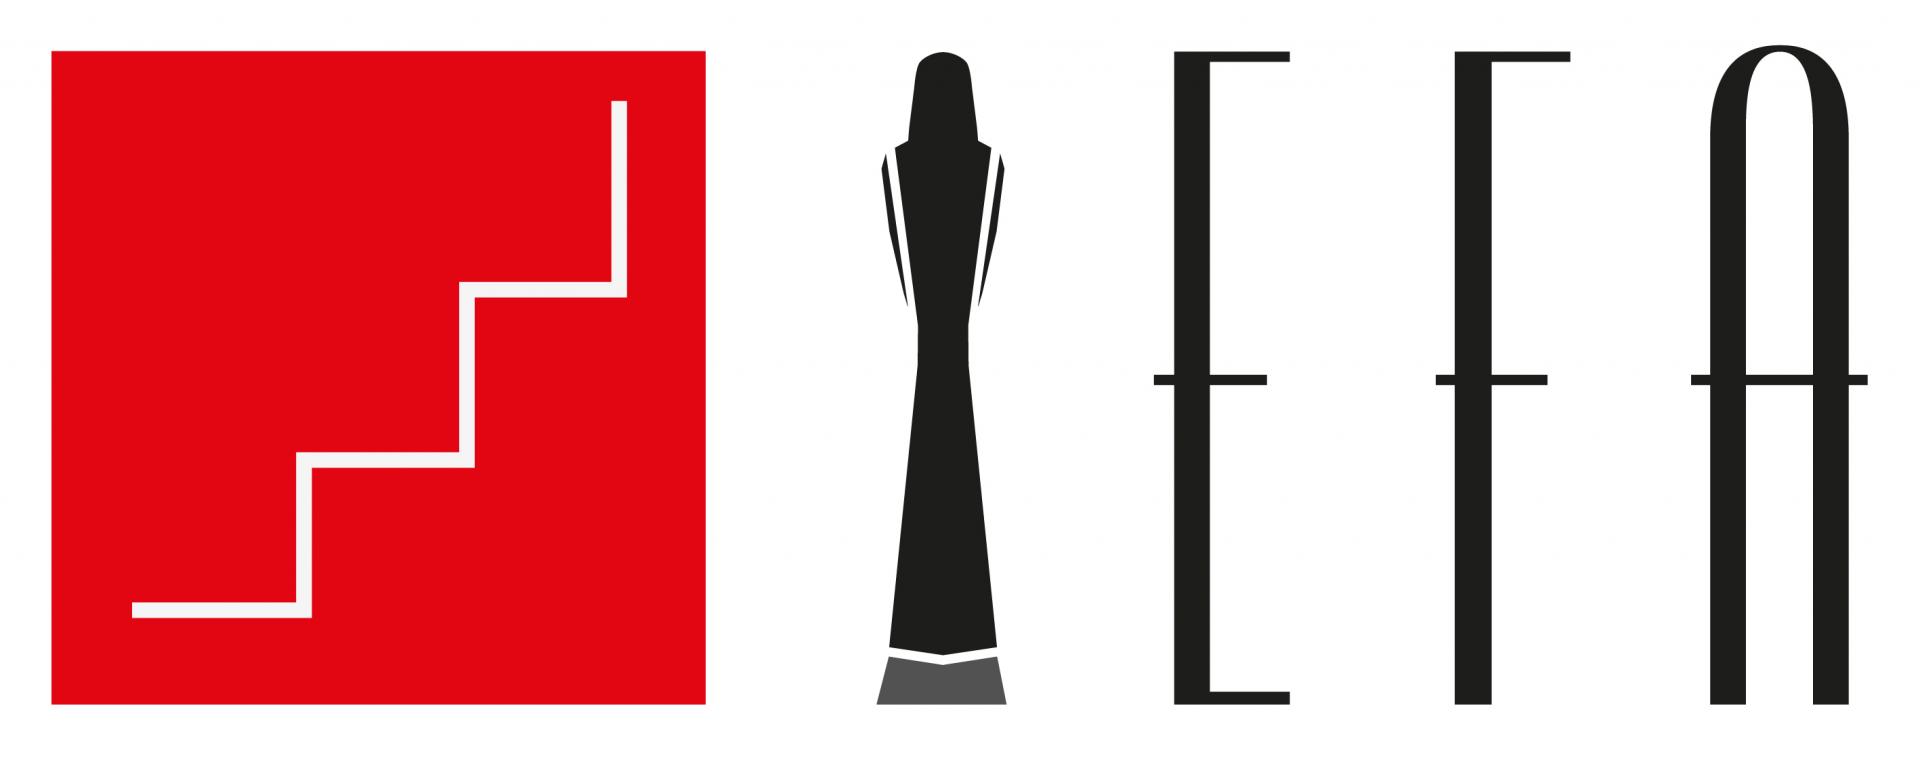 European Film Awards logo